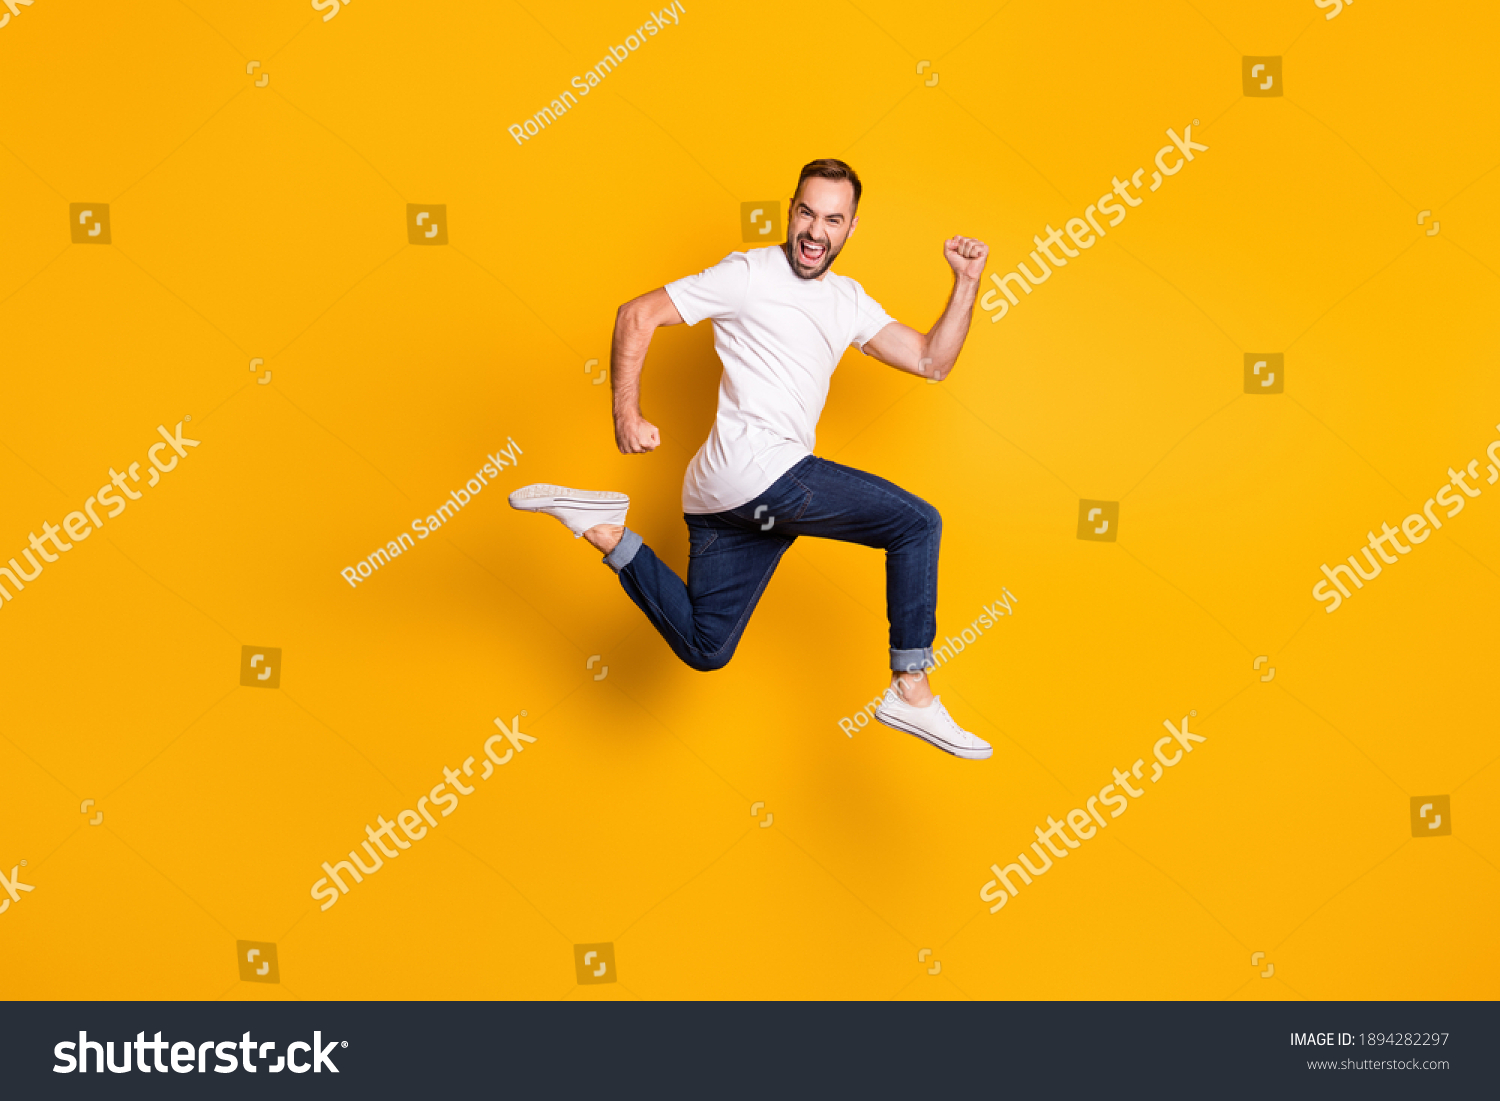 Full Length Body Size Photo Jumping Stock Photo Shutterstock